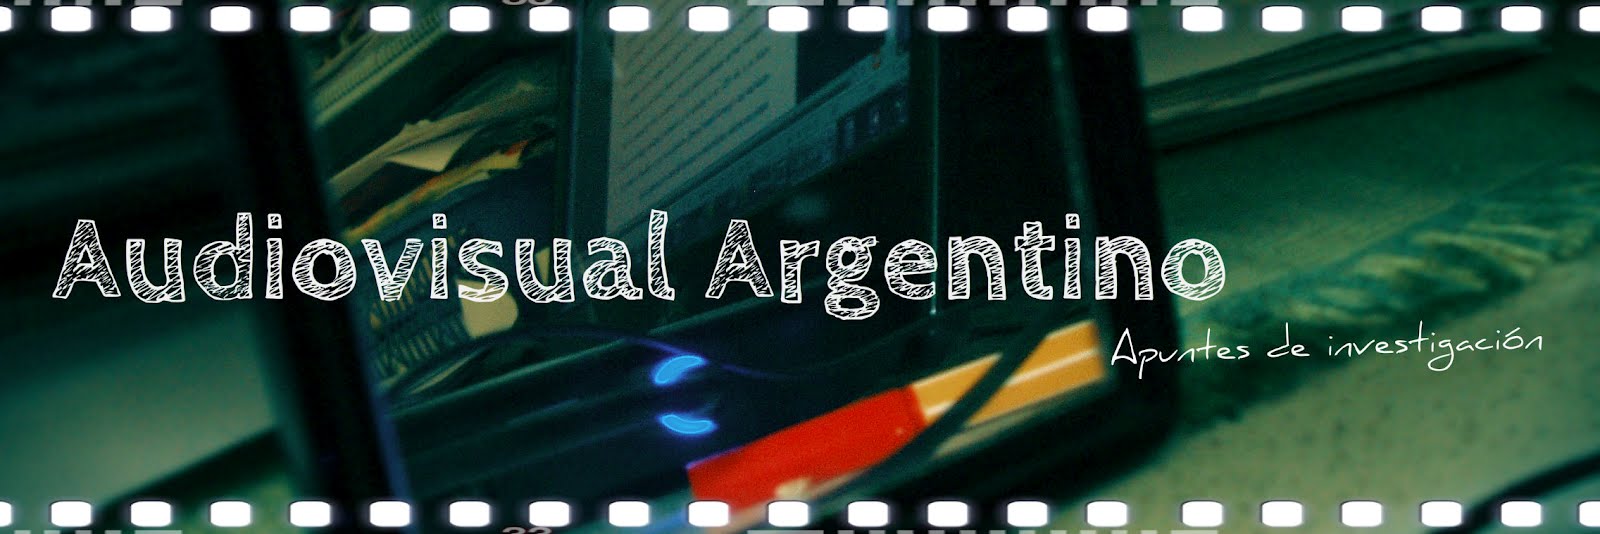 Audiovisual Argentino